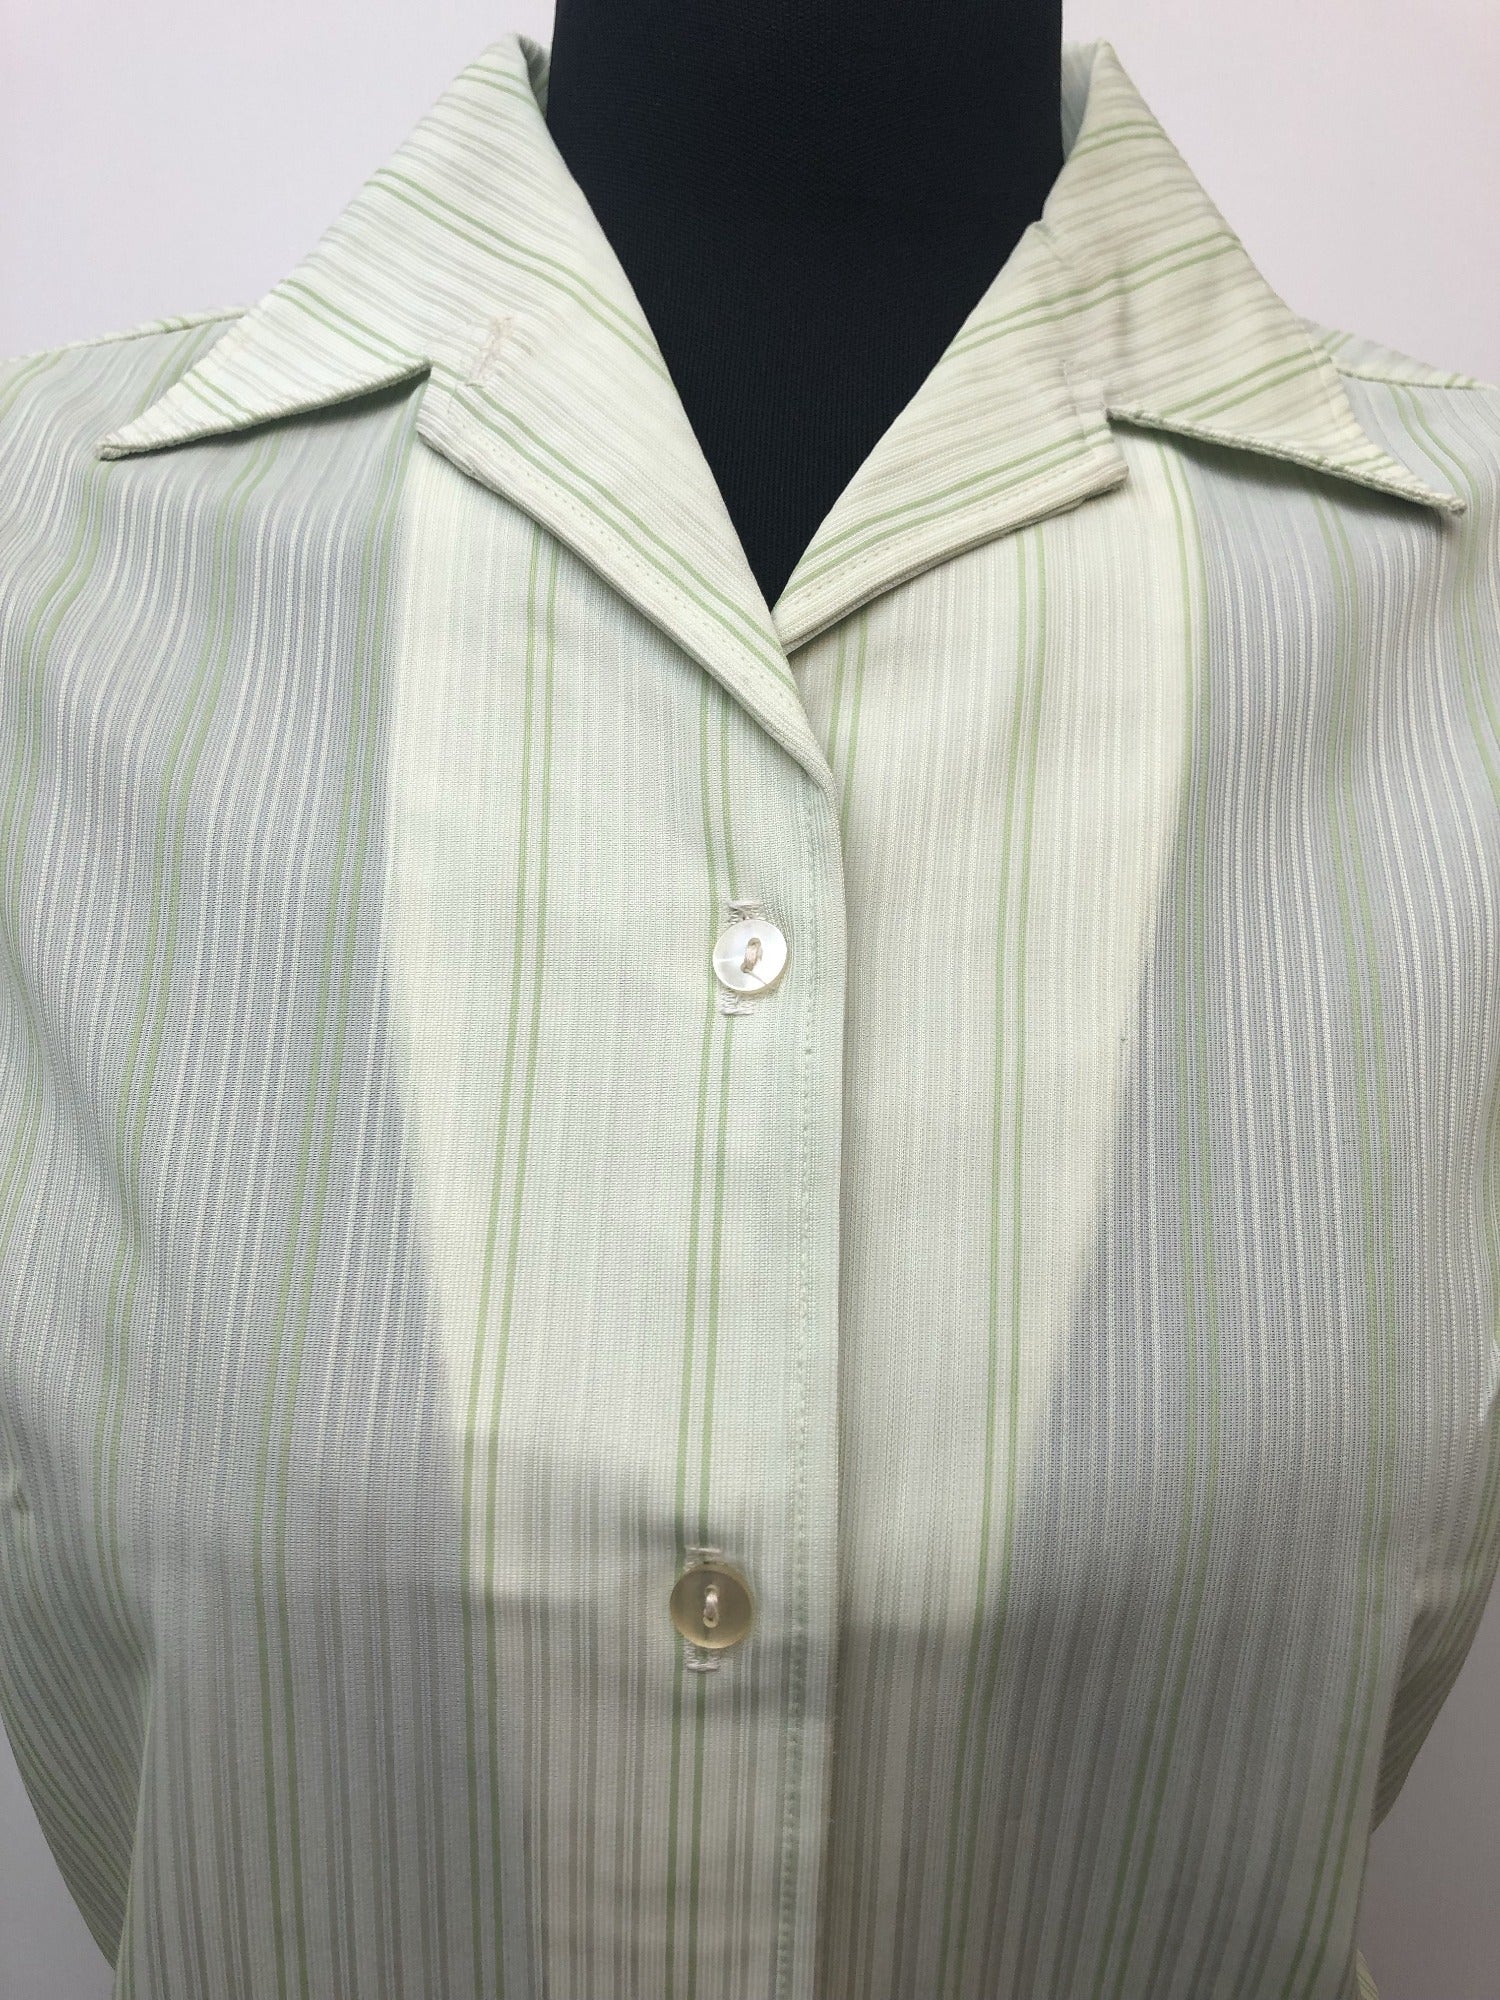 wool  womens  vintage  vest  Urban Village Vintage  urban village  top  Stripes  sleevless  sleeveless  retro  pure wool  Green  blouse